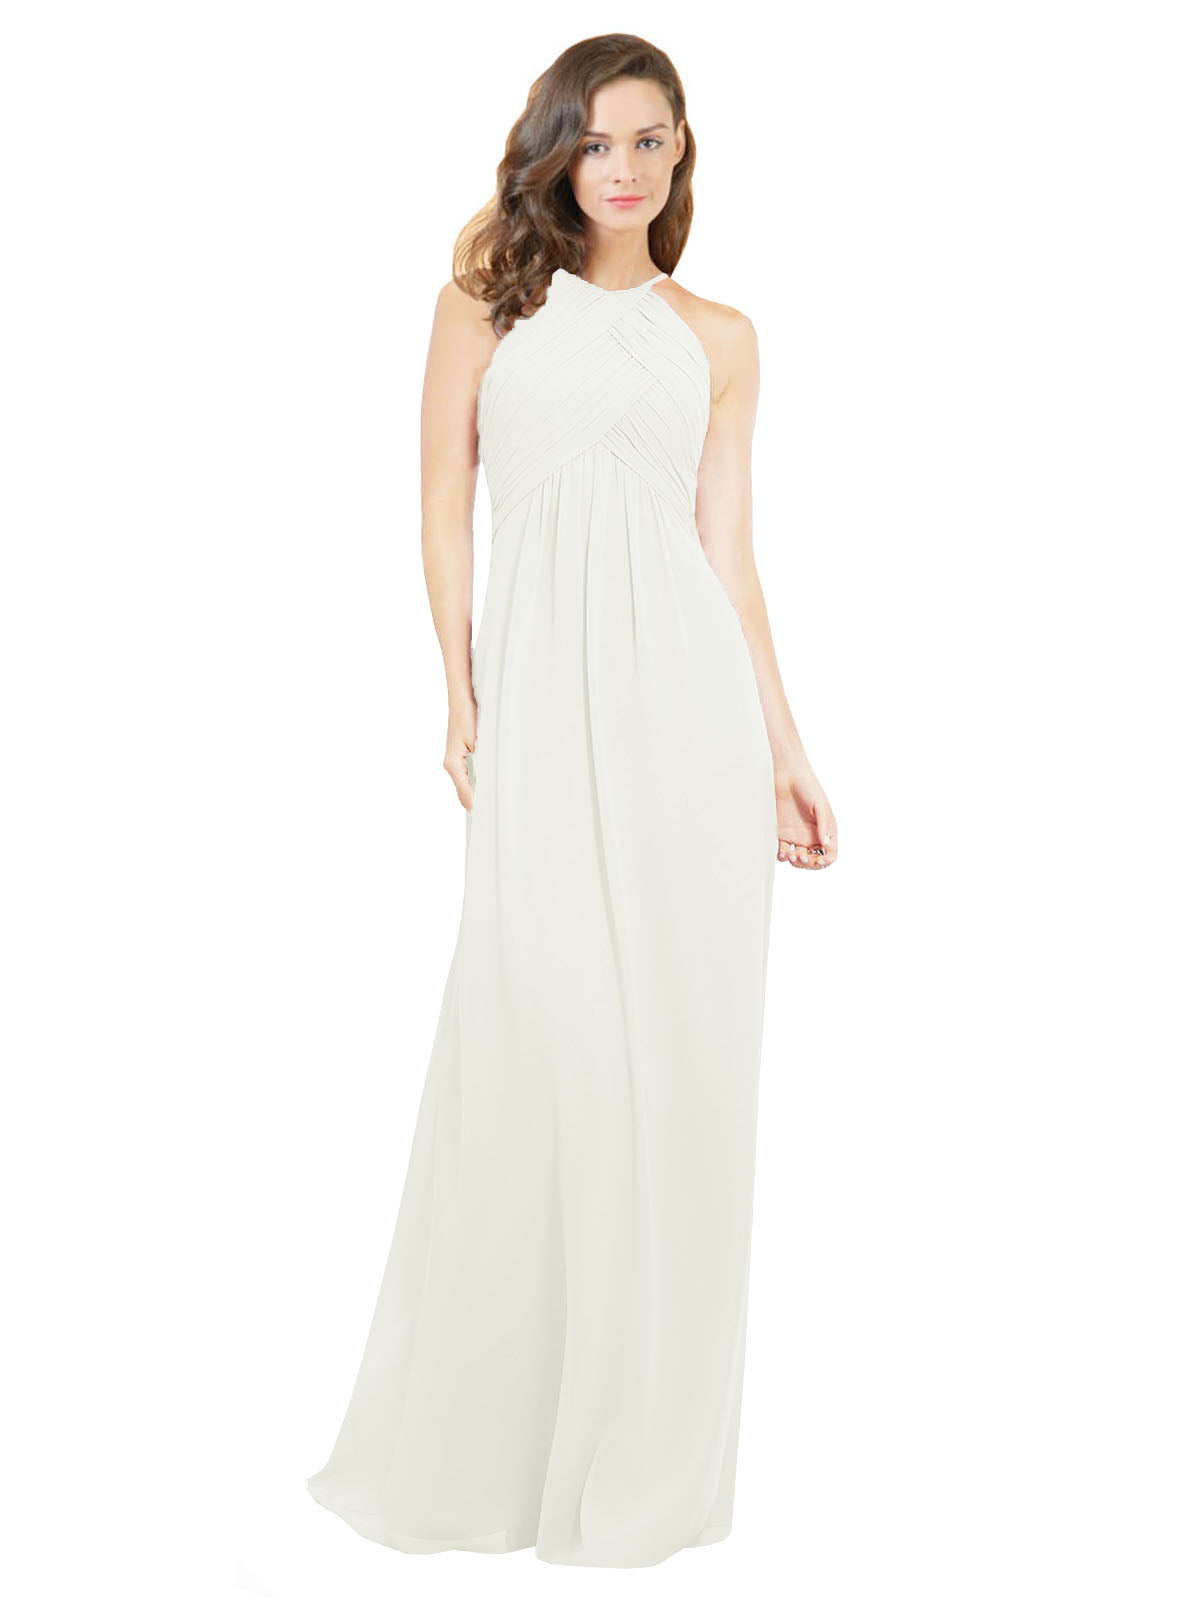 Ivory A-Line Halter Sleeveless Long Bridesmaid Dress Robyn